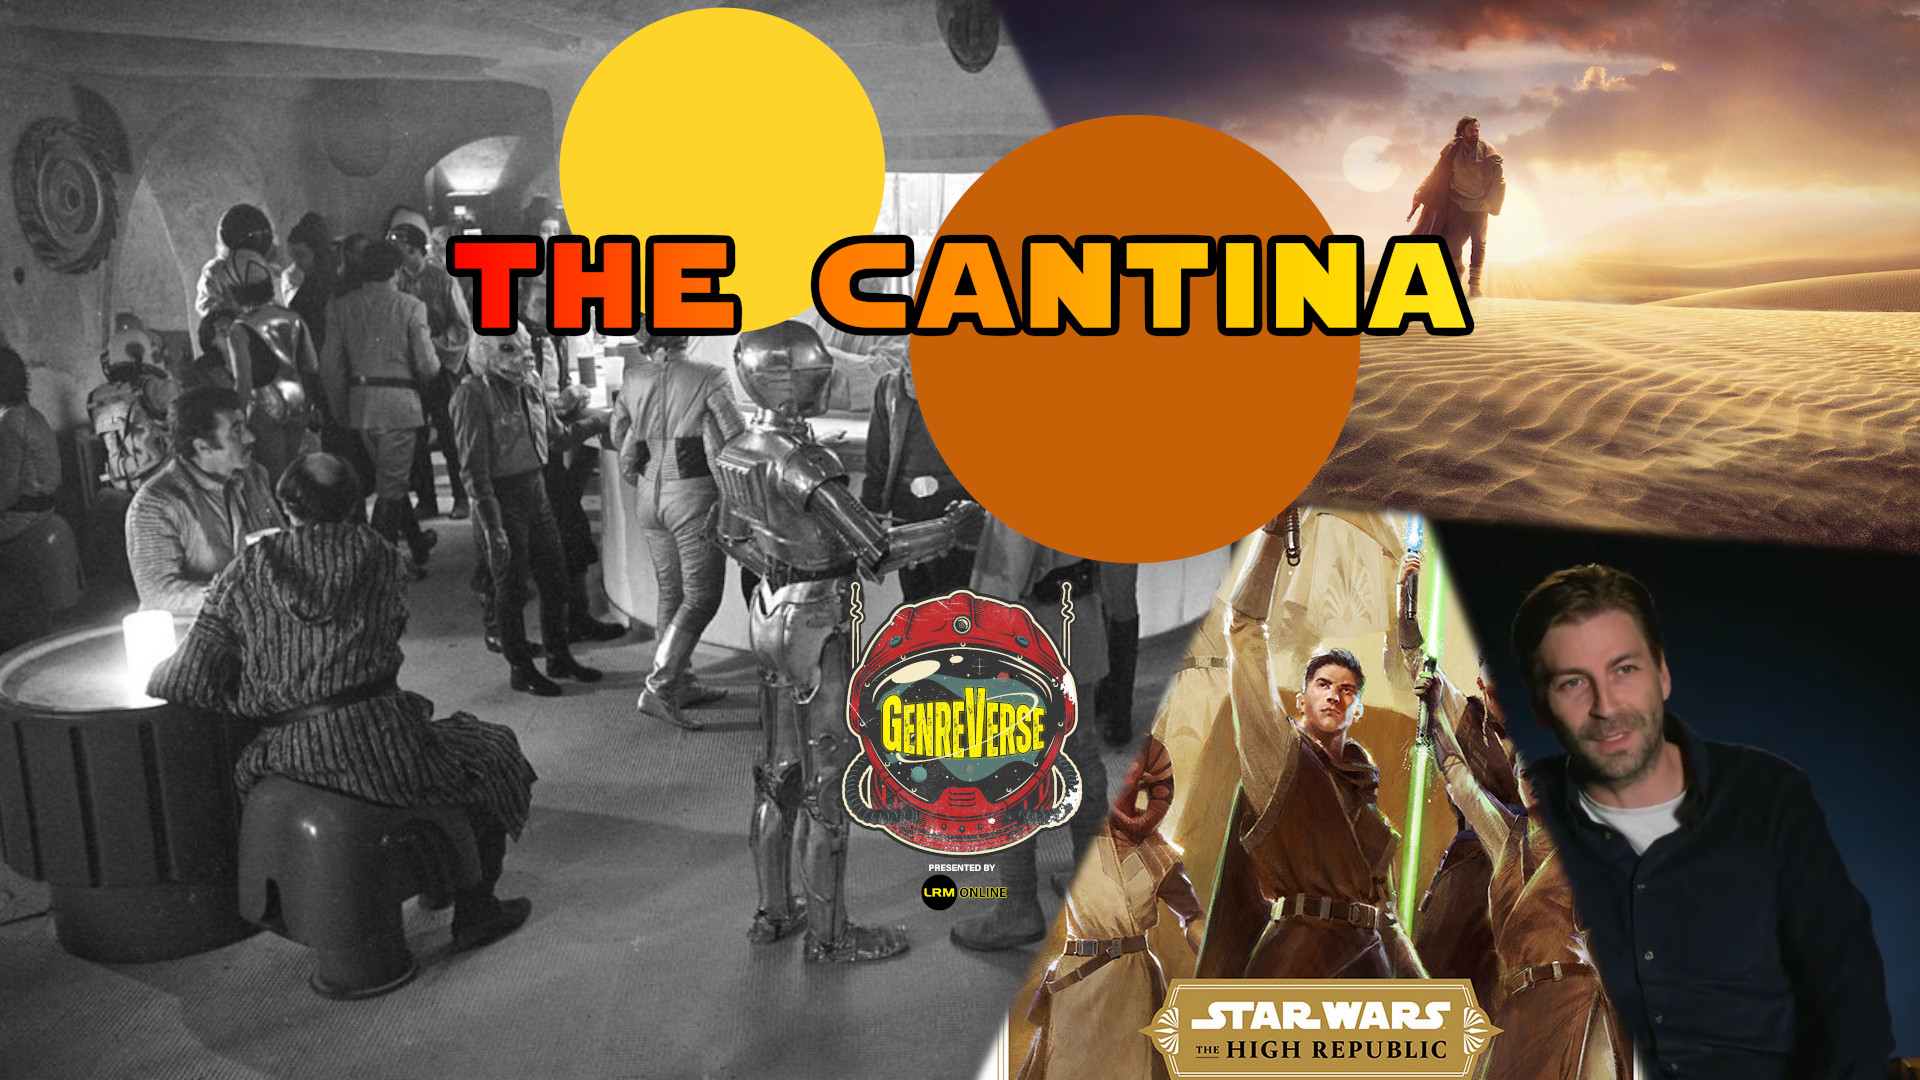 Obi-Wan Kenobi Story Theories And Rumors, Jon Watts For The High Republic, Galactic Starcruiser Reviews The Cantina